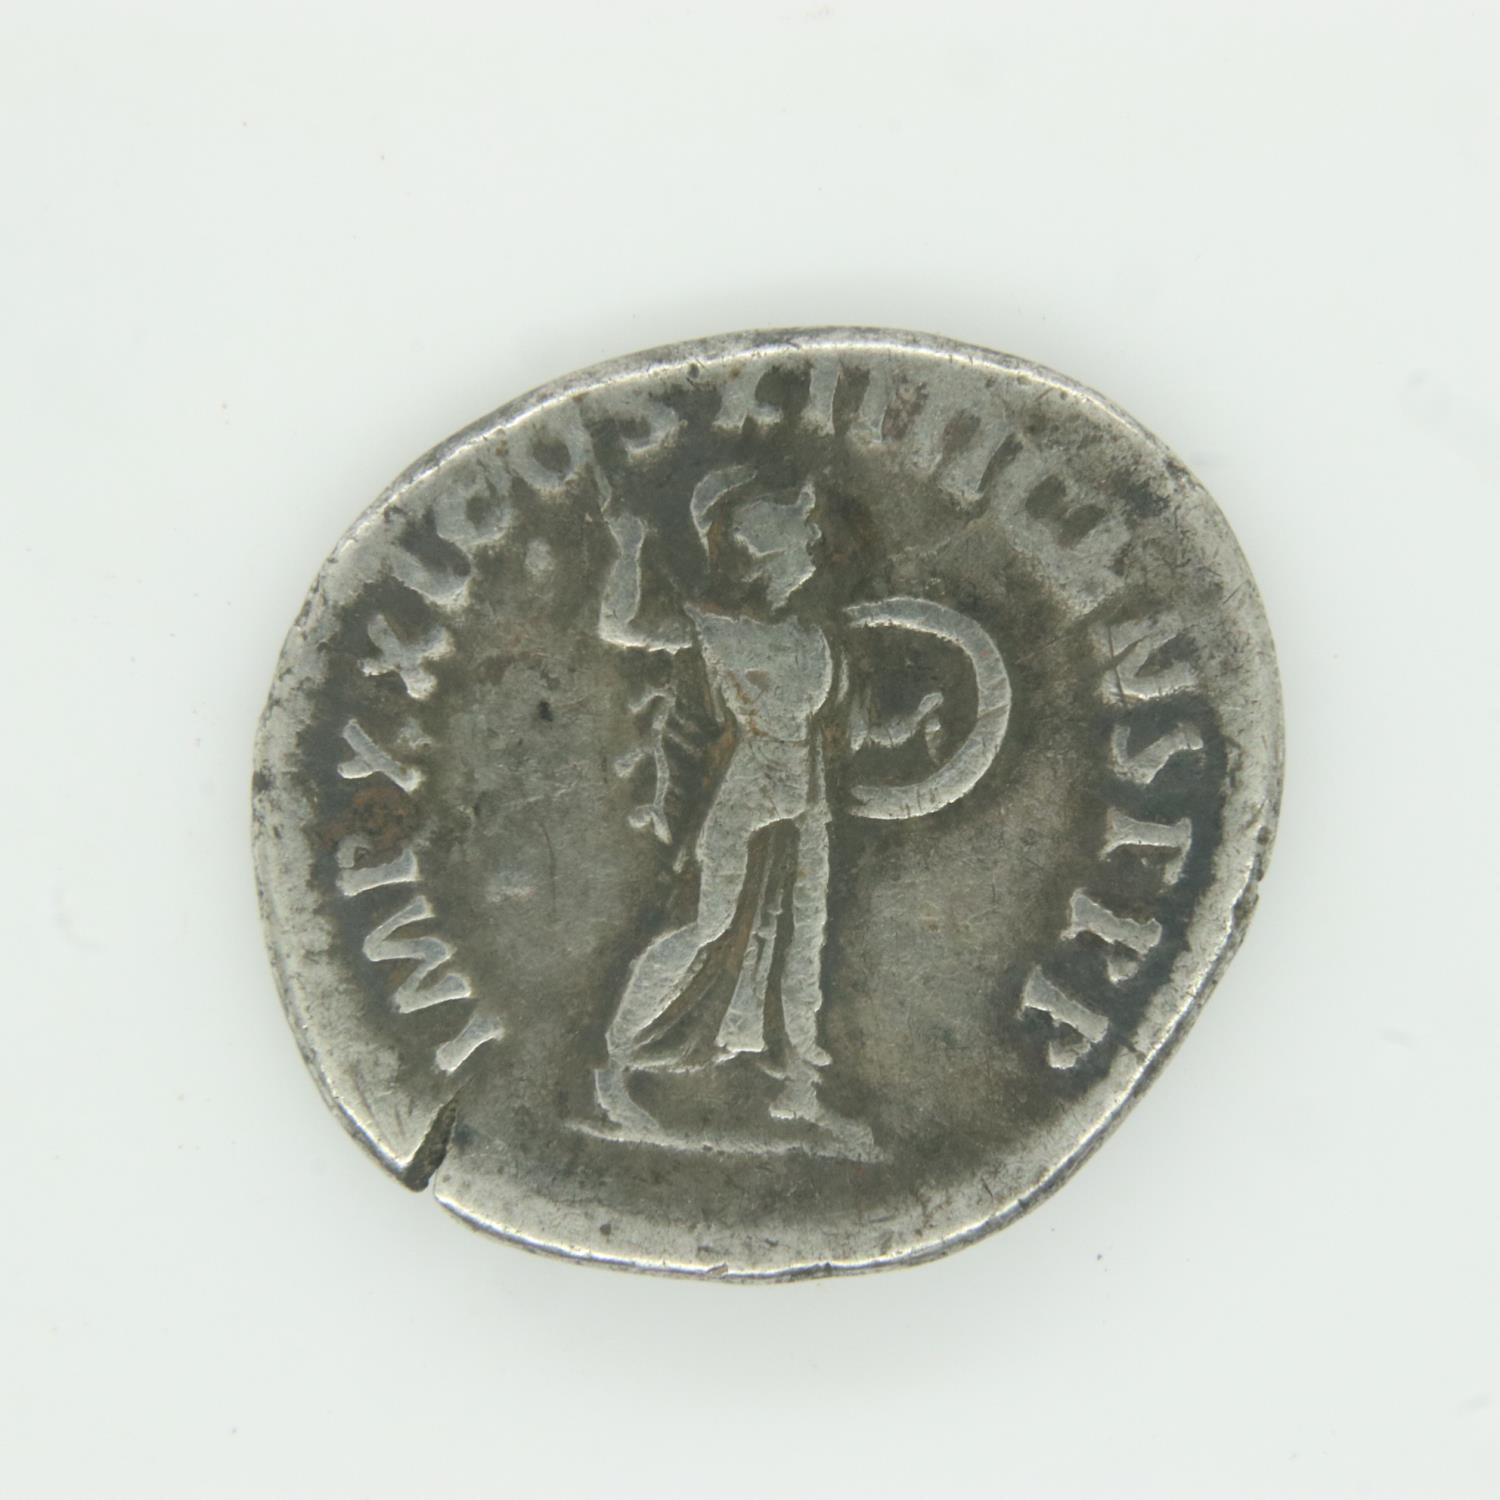 Roman Denarius of emperor Domitian 92-93 AD showing goddess of wisdom Minerva. UK P&P Group 0 (£6+